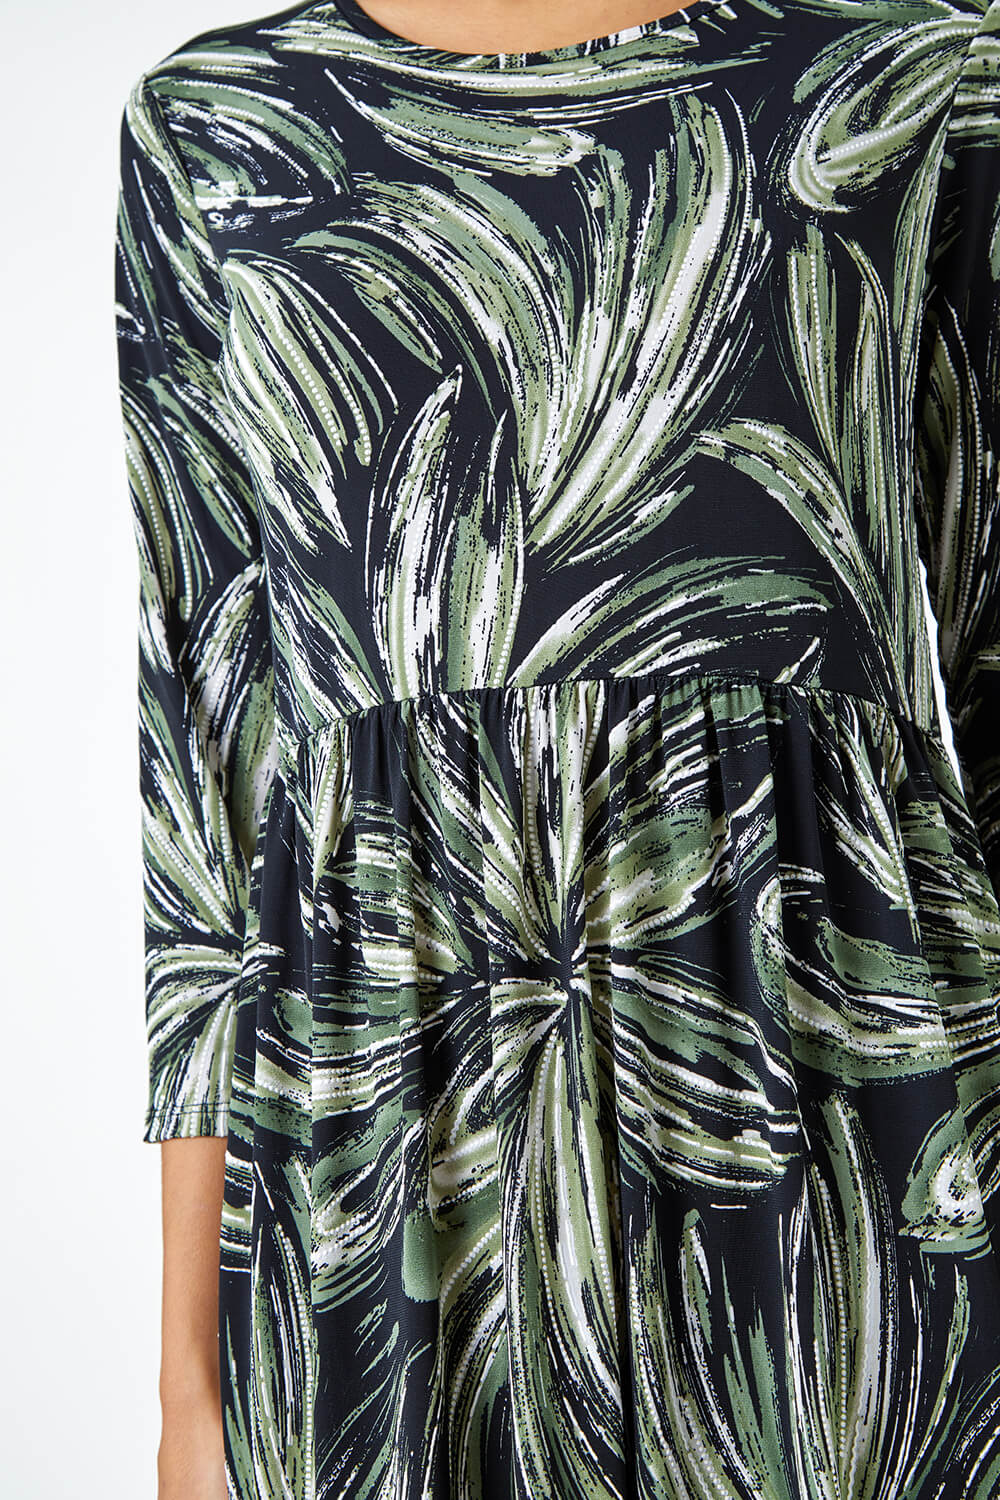 KHAKI Textured Floral Print Midi Stretch Dress, Image 5 of 5